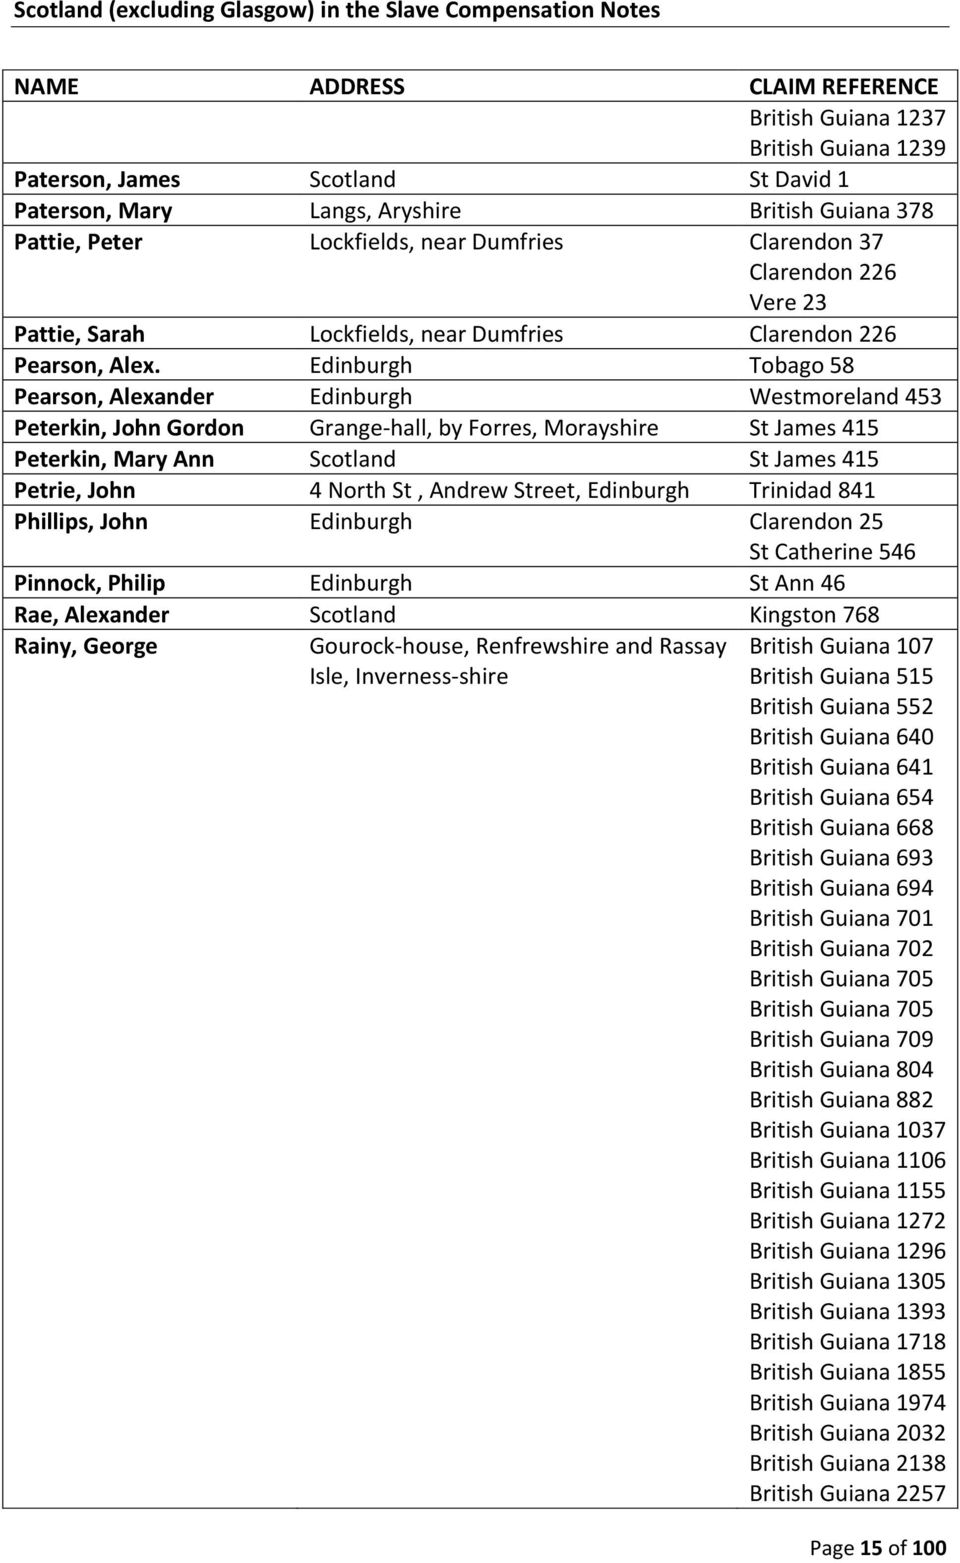 Edinburgh Tobago 58 Pearson, Alexander Edinburgh Westmoreland 453 Peterkin, John Gordon Grange-hall, by Forres, Morayshire St James 415 Peterkin, Mary Ann Scotland St James 415 Petrie, John 4 North